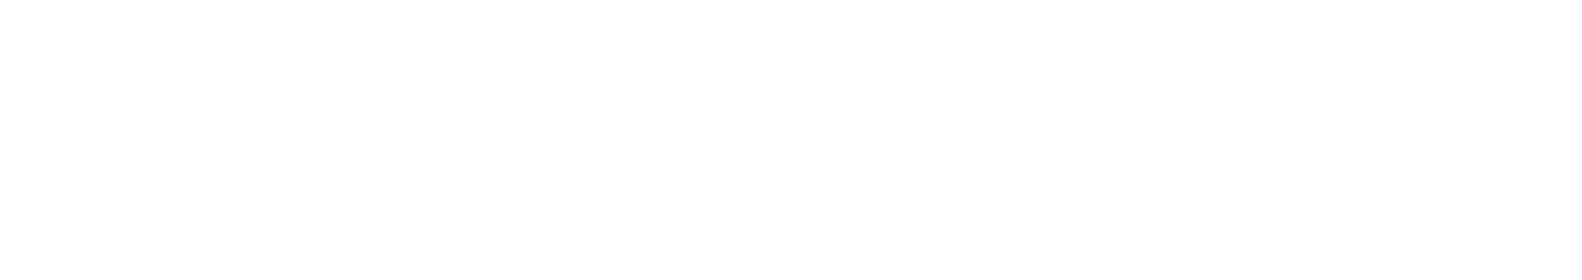 Paccar Logo groß für dunkle Hintergründe (transparentes PNG)